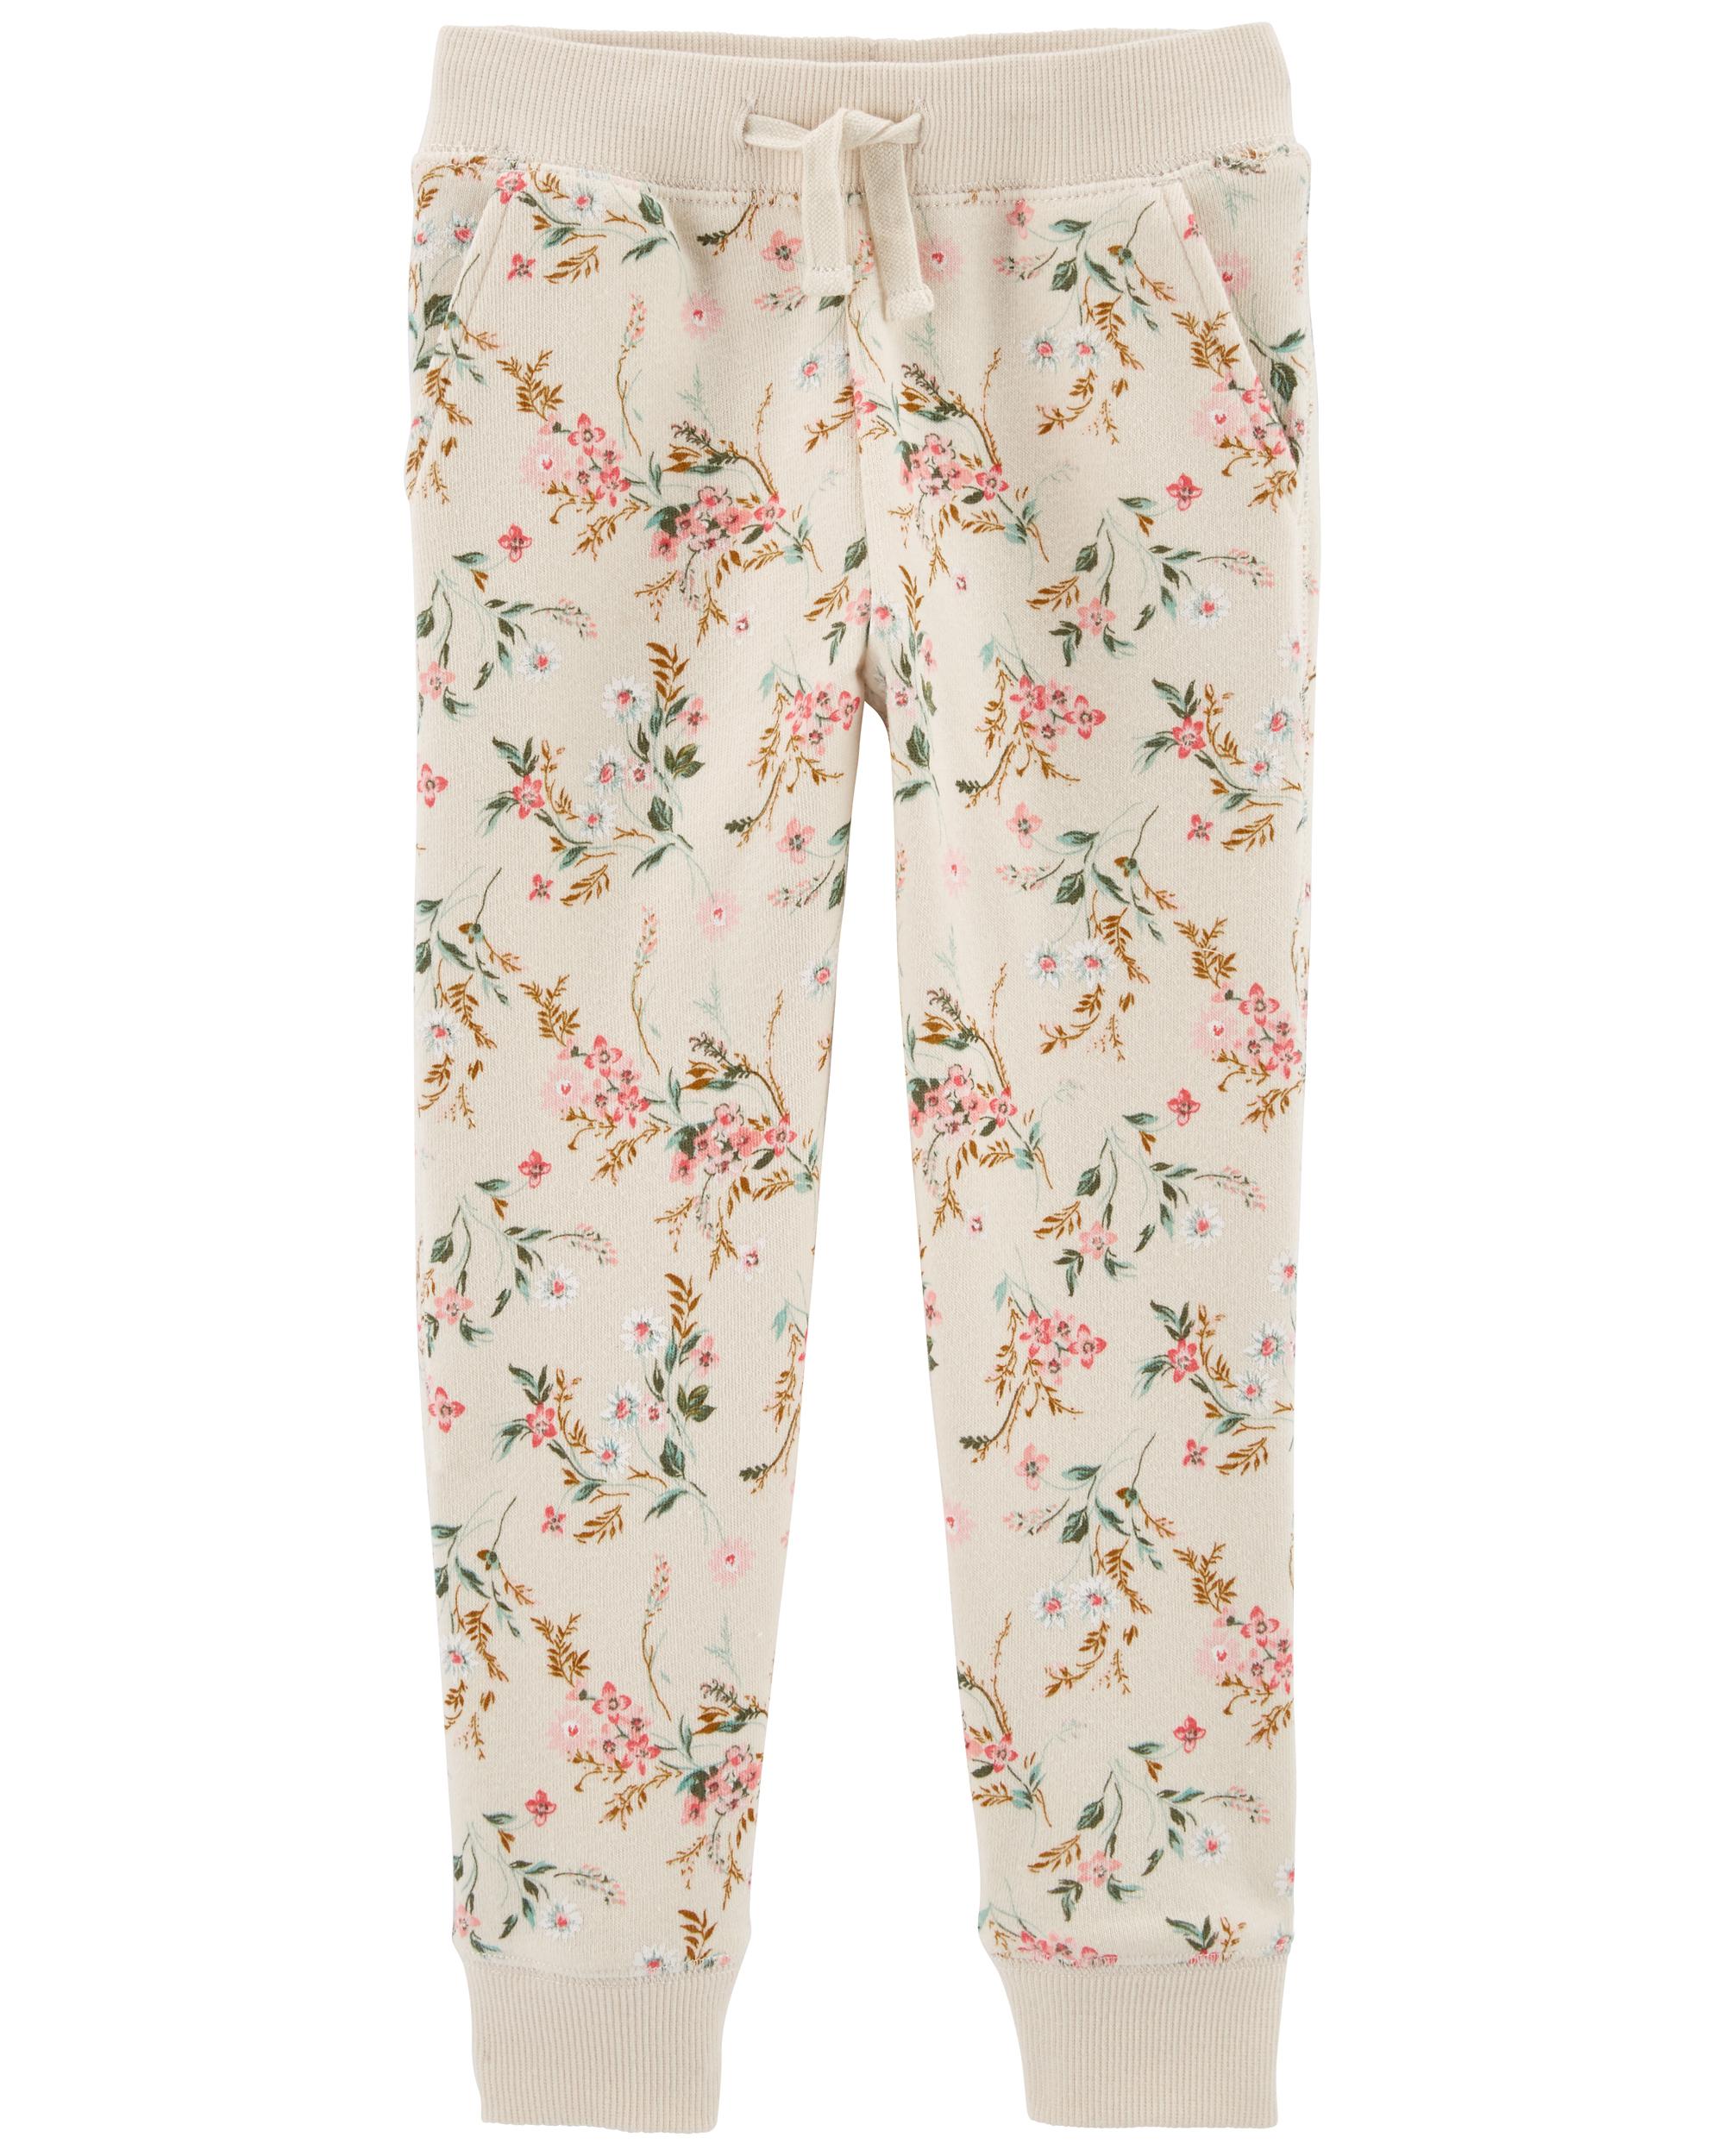 Cream Vintage Floral Print Pull-On Fleece Pants | carters.com